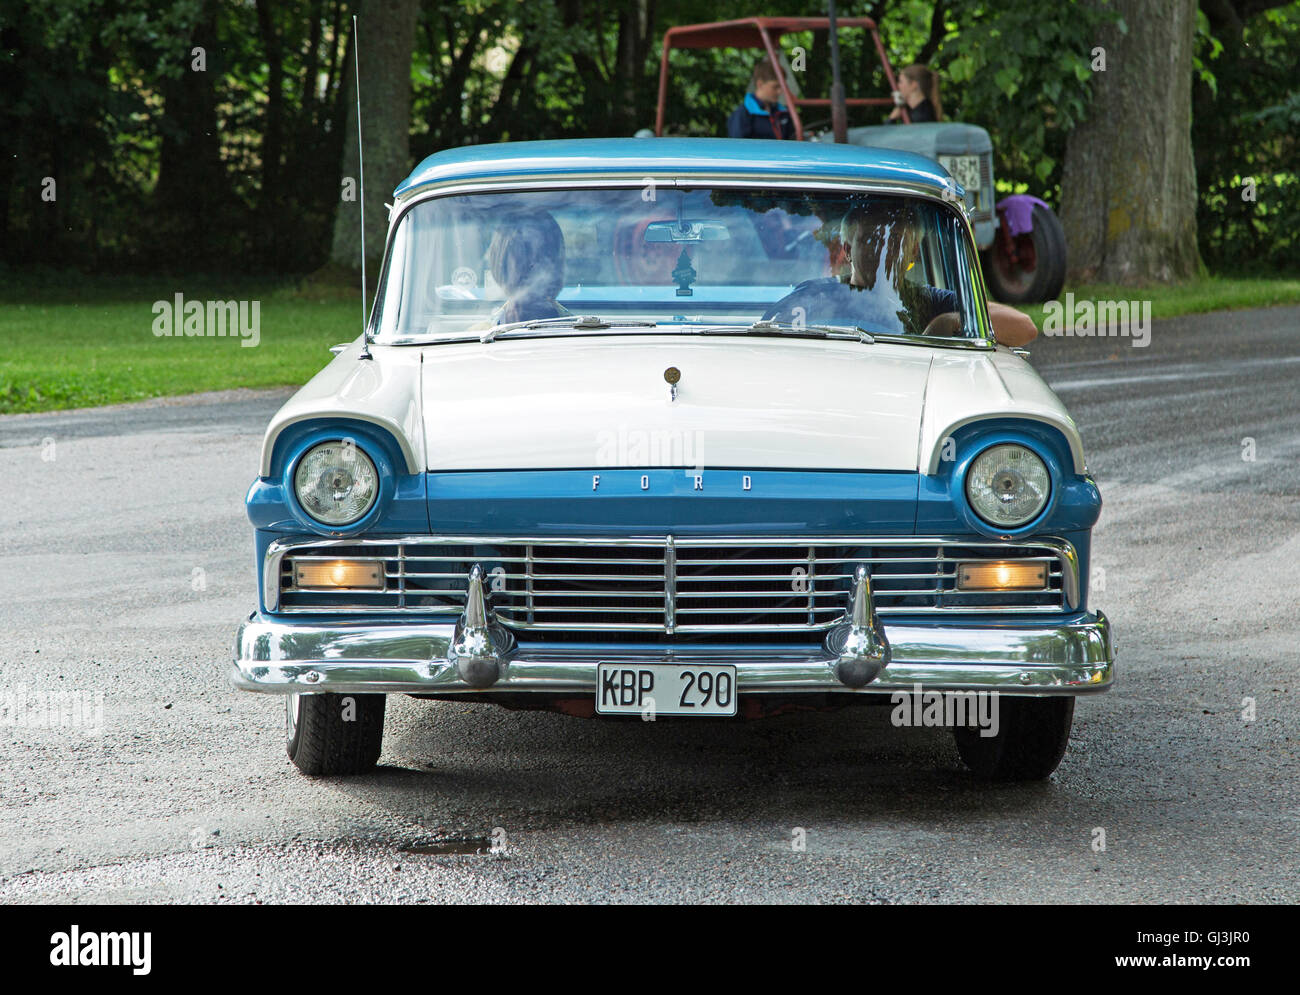 TROSA SWEDEN Juli 16 2015 veteran car meeting. FORD RANCHEN Model year 1957. Stock Photo